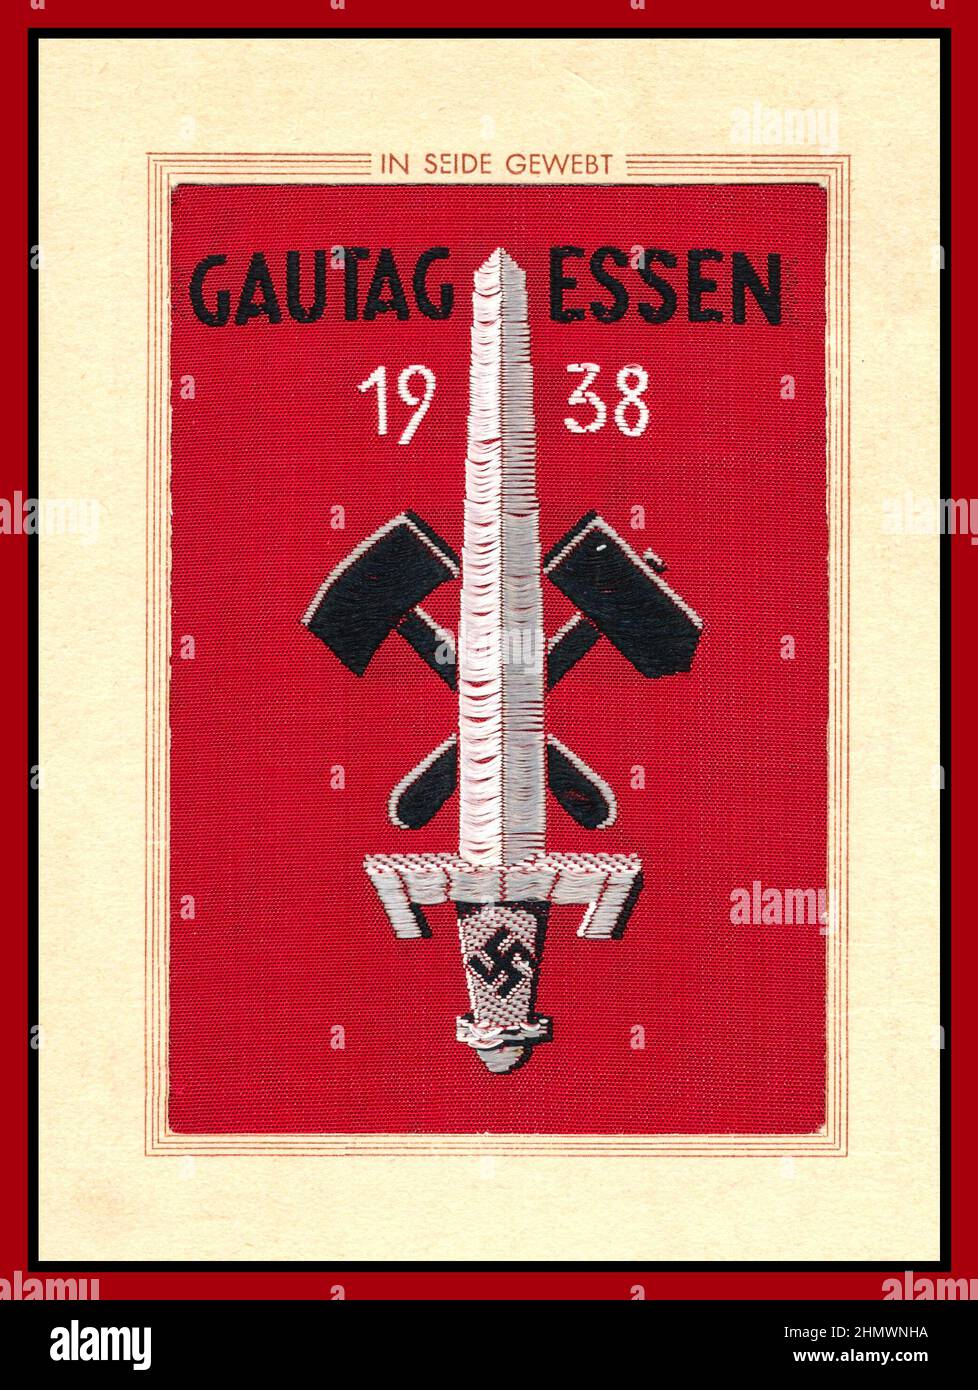 Nazi Propaganda' in seide gewebt' woven in silk 'Good day in Essen 1938 with sword crossed hammers and swastika symbol invitation card Stock Photo